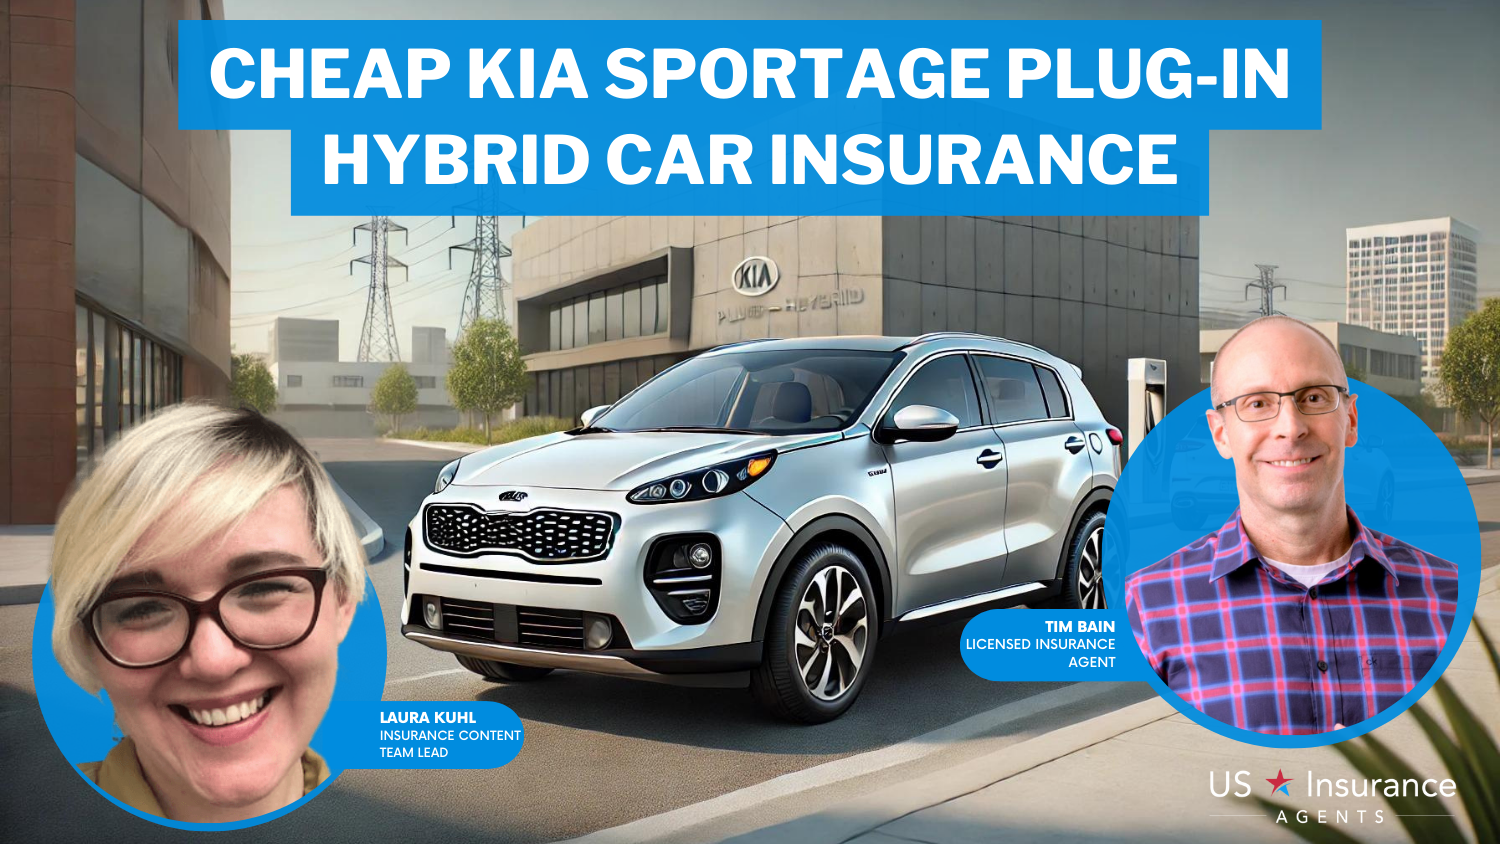 Cheap Kia Sportage Plug-in Hybrid Car Insurance: Erie, State Farm, and Safeco